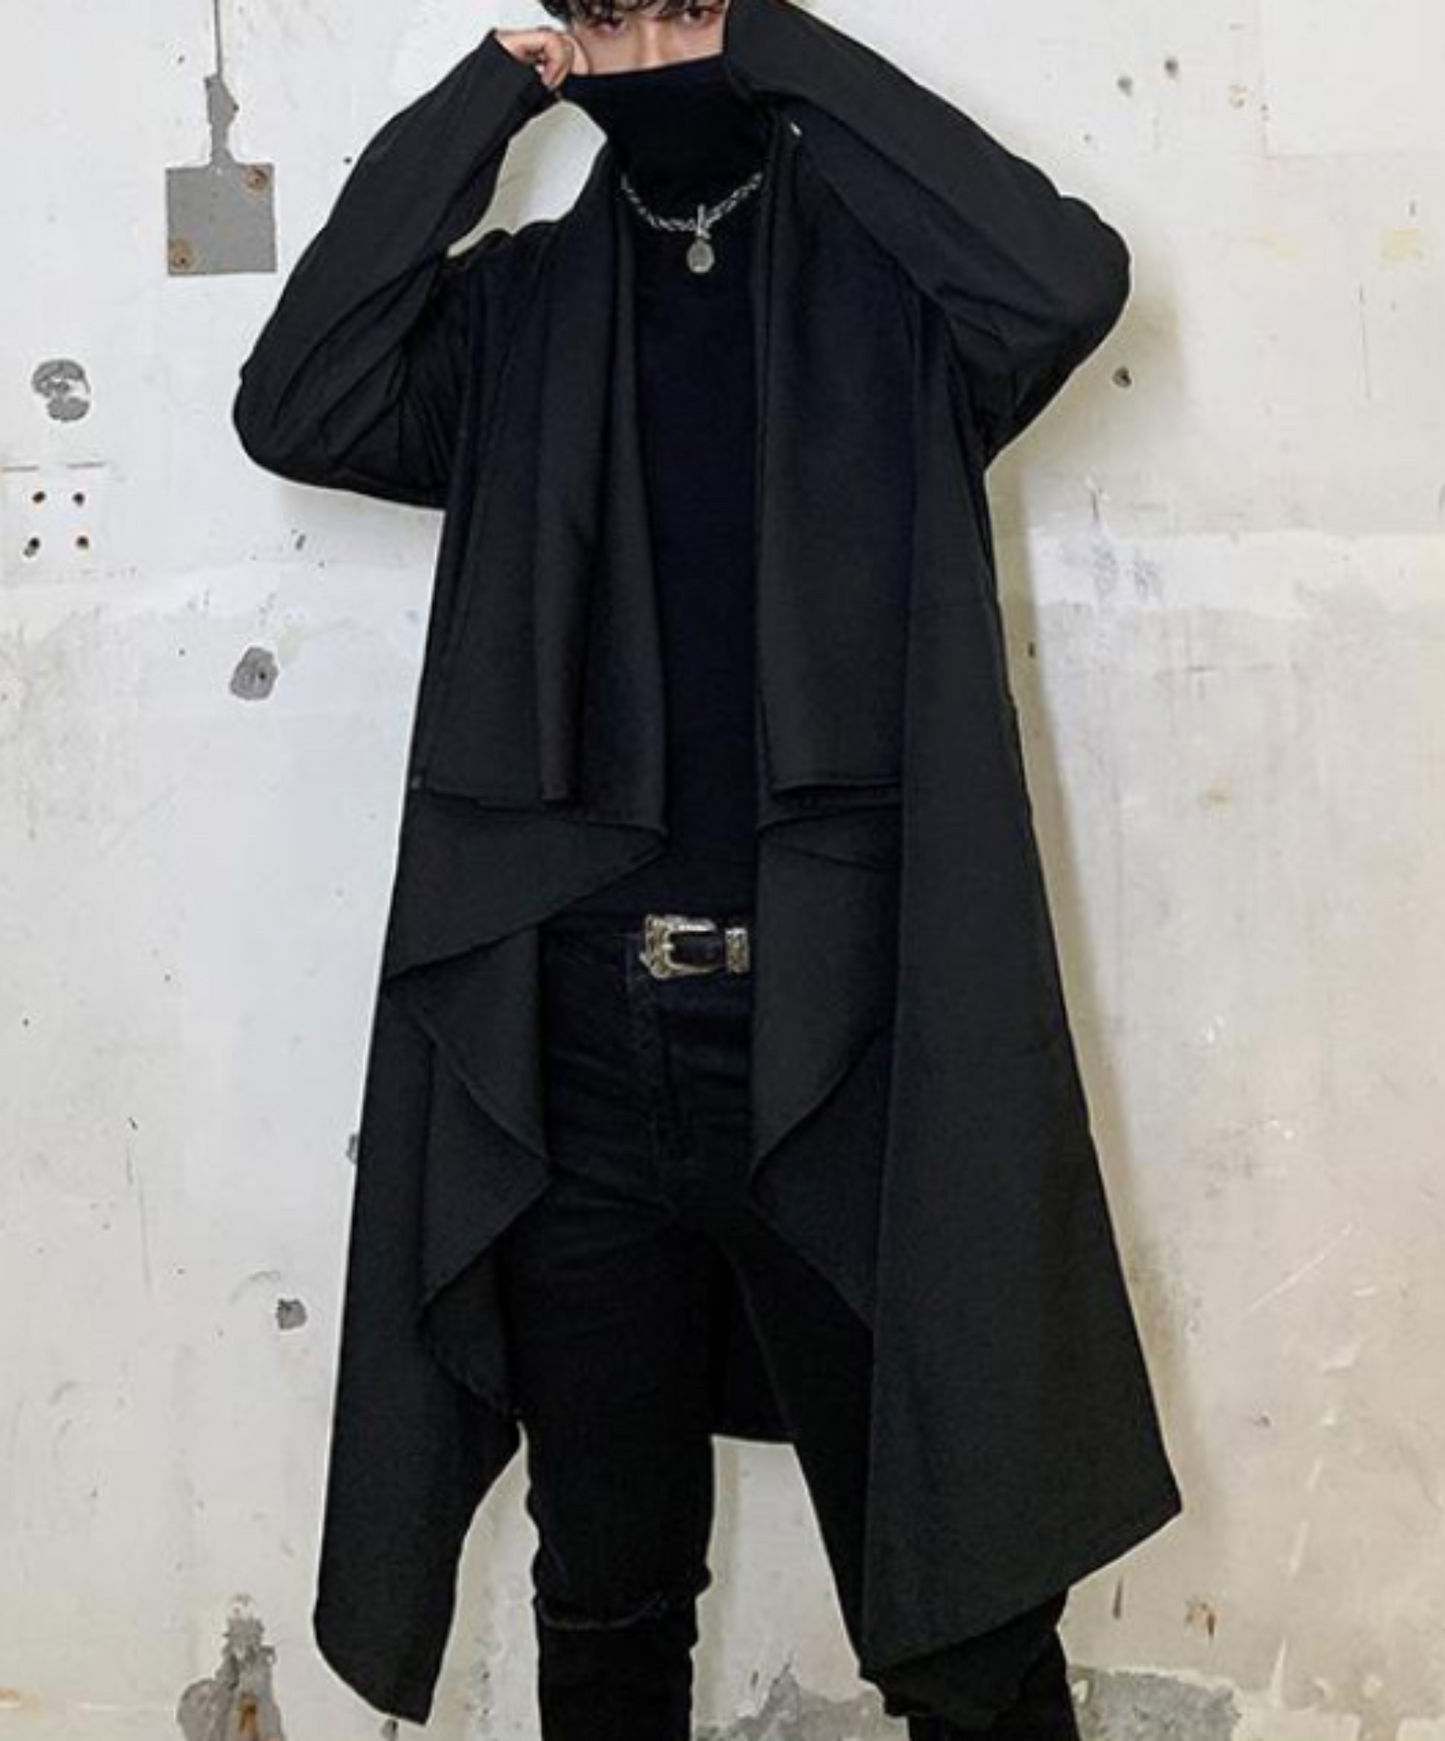 【style20】dark mode outfit set EN931（jacket + pants set）